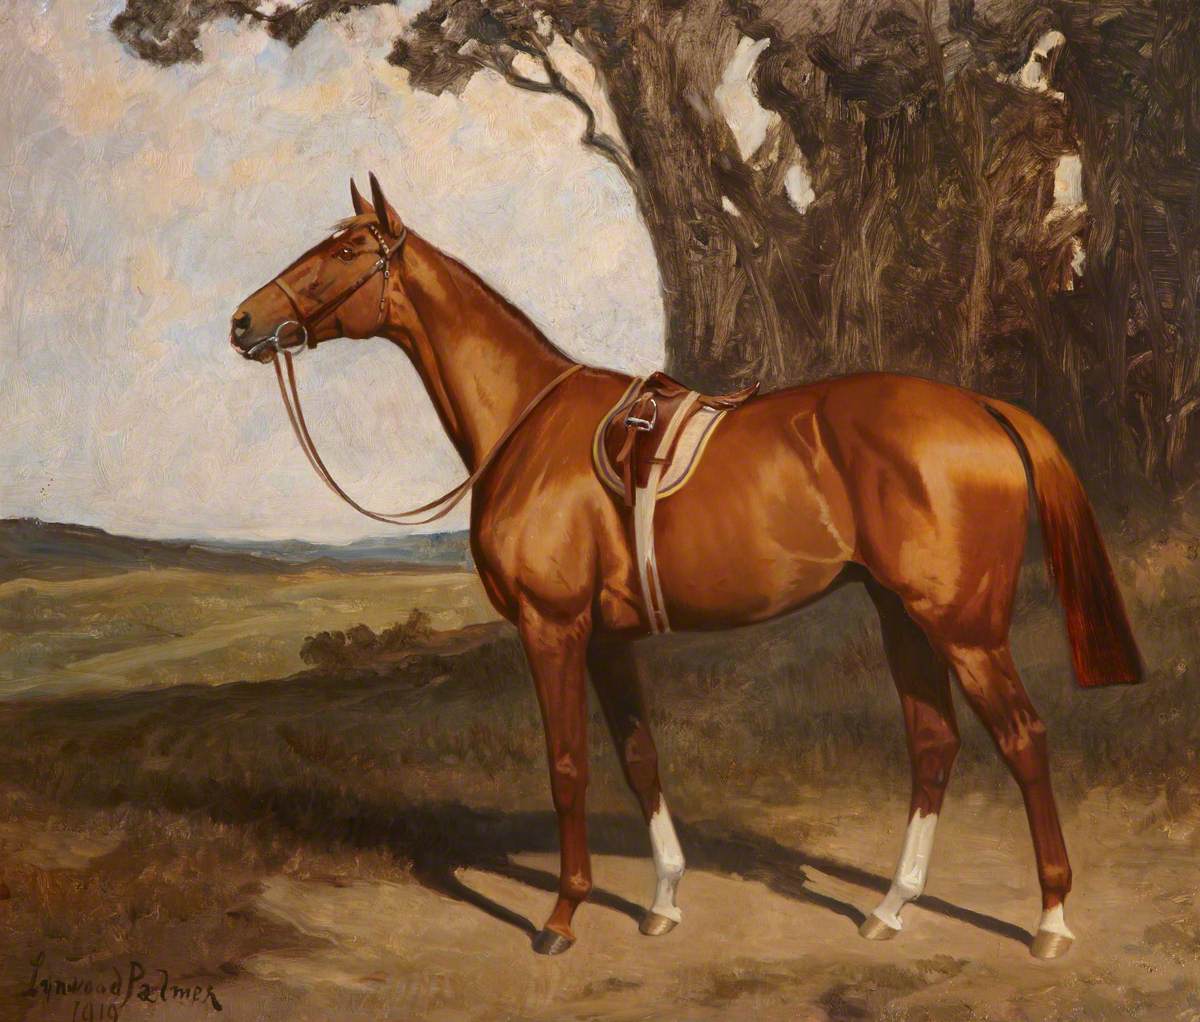 'Benevente', a Saddled Chestnut Racehorse in a Landscape